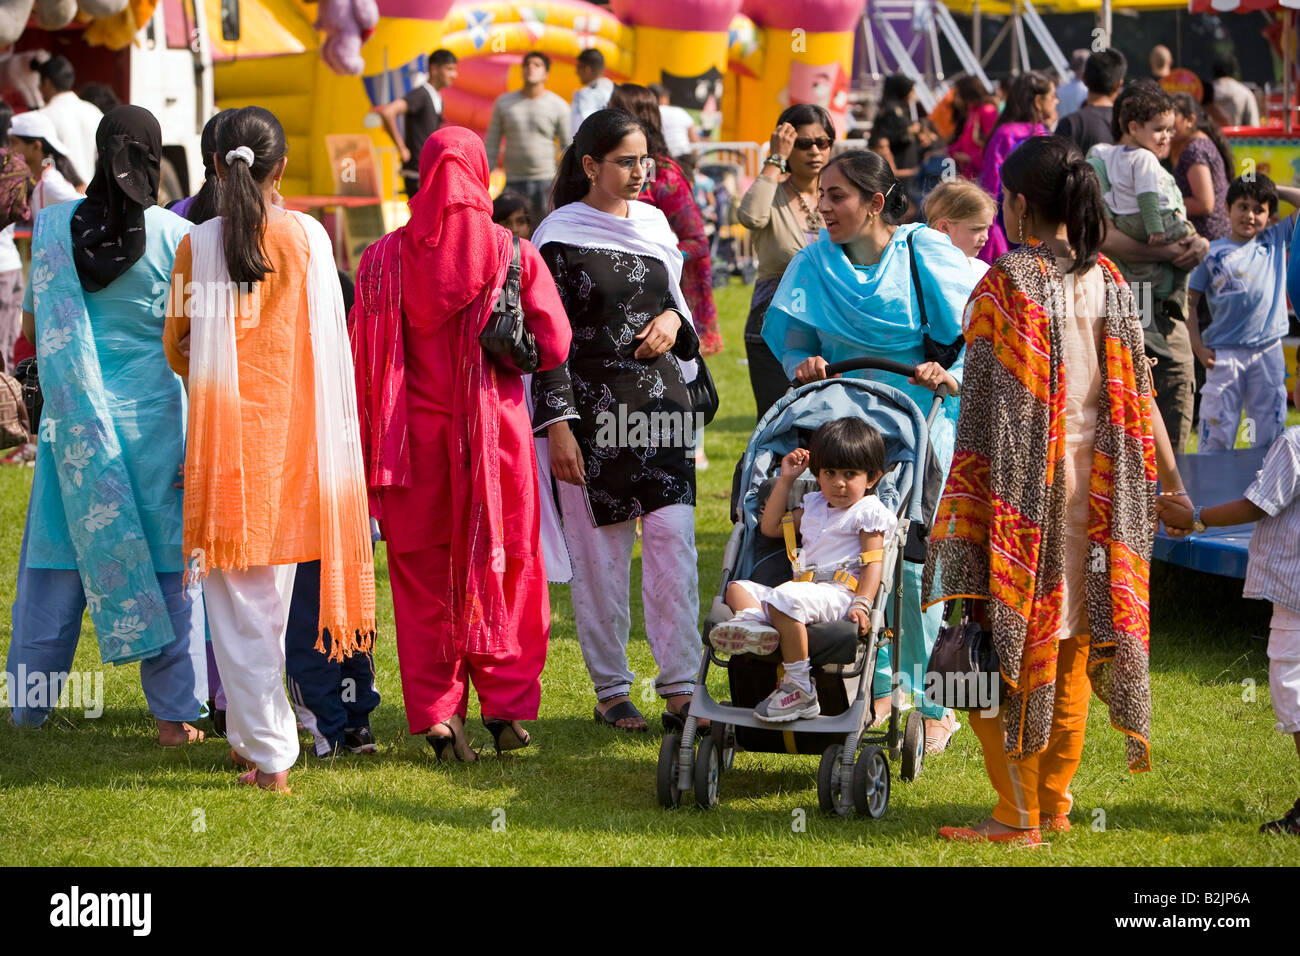 UK England Manchester Platt Fields Mega Mela shalwar kameez wearing Pakistani women visitors Stock Photo